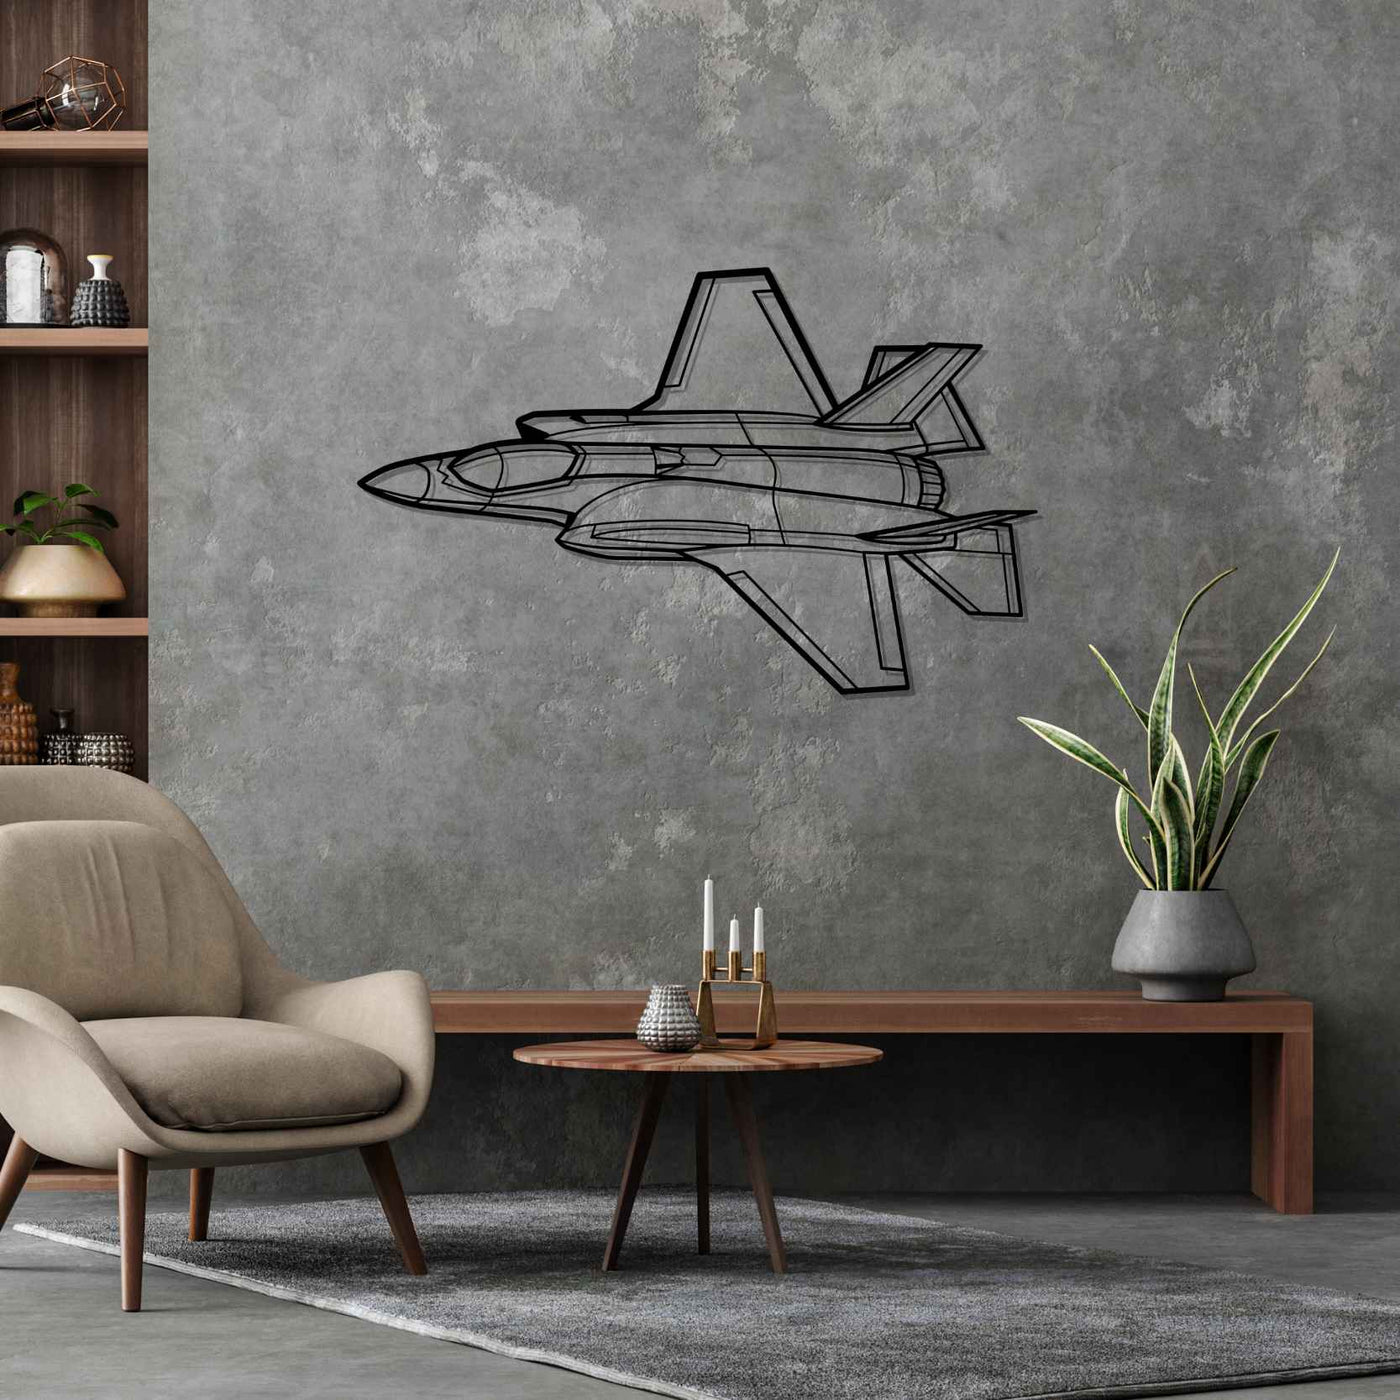 F-35A Lightning II Angle Silhouette Metal Wall Art